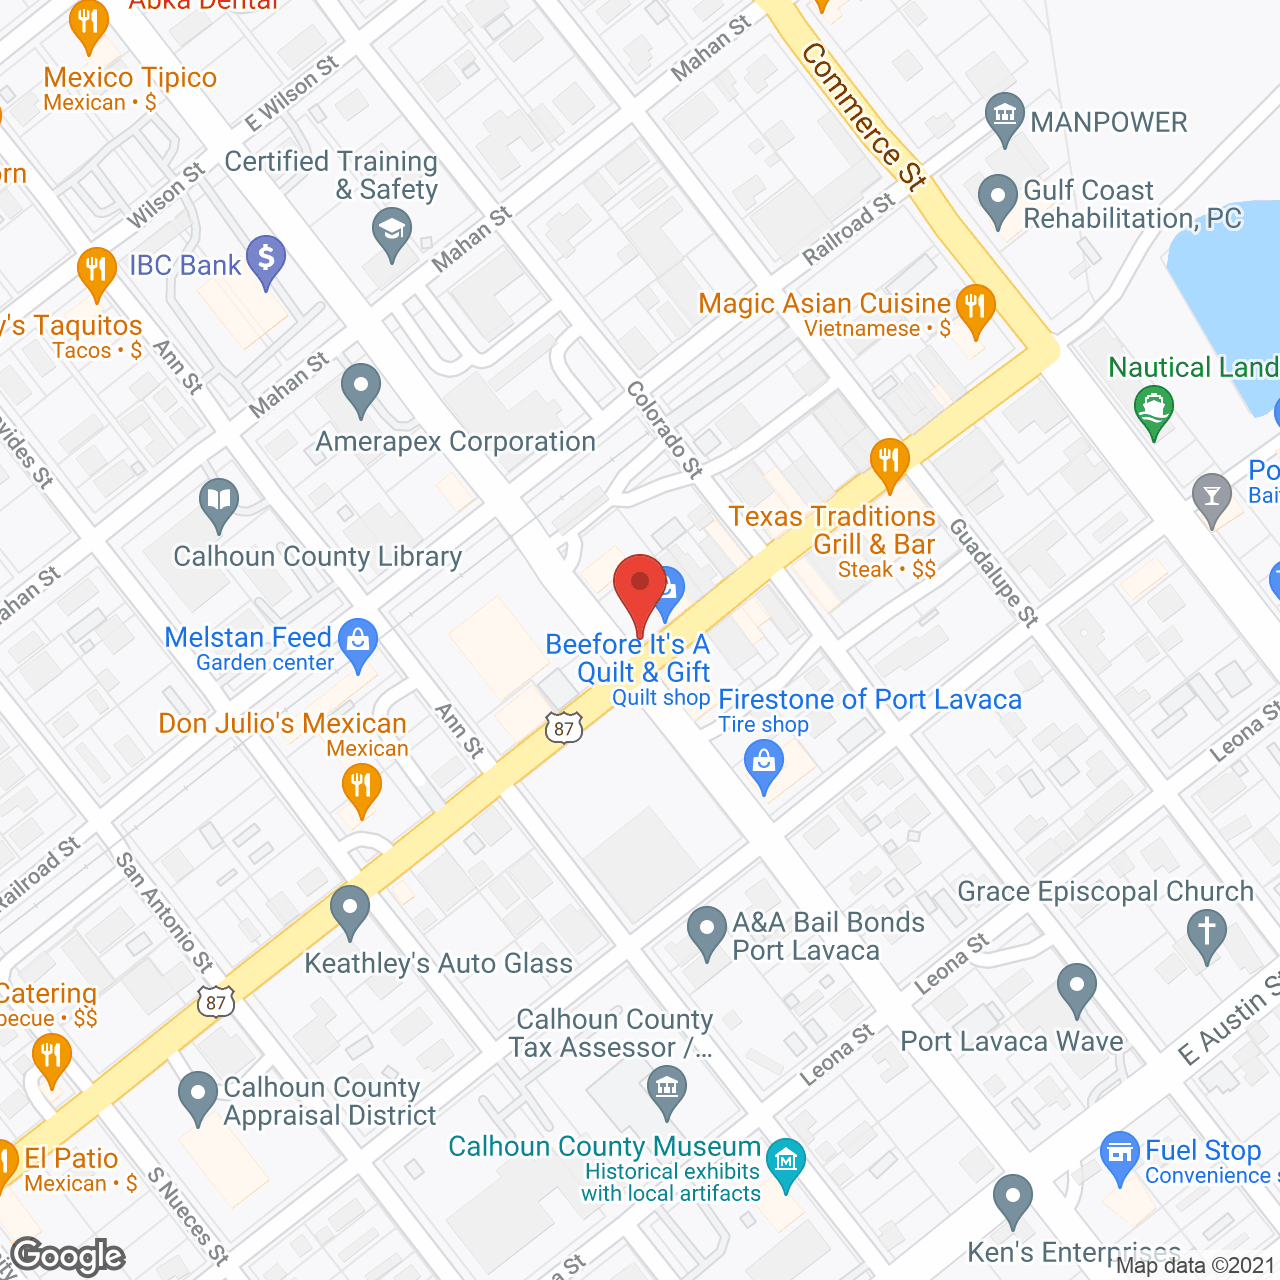 Trinity Shores of Port Lavaca in google map